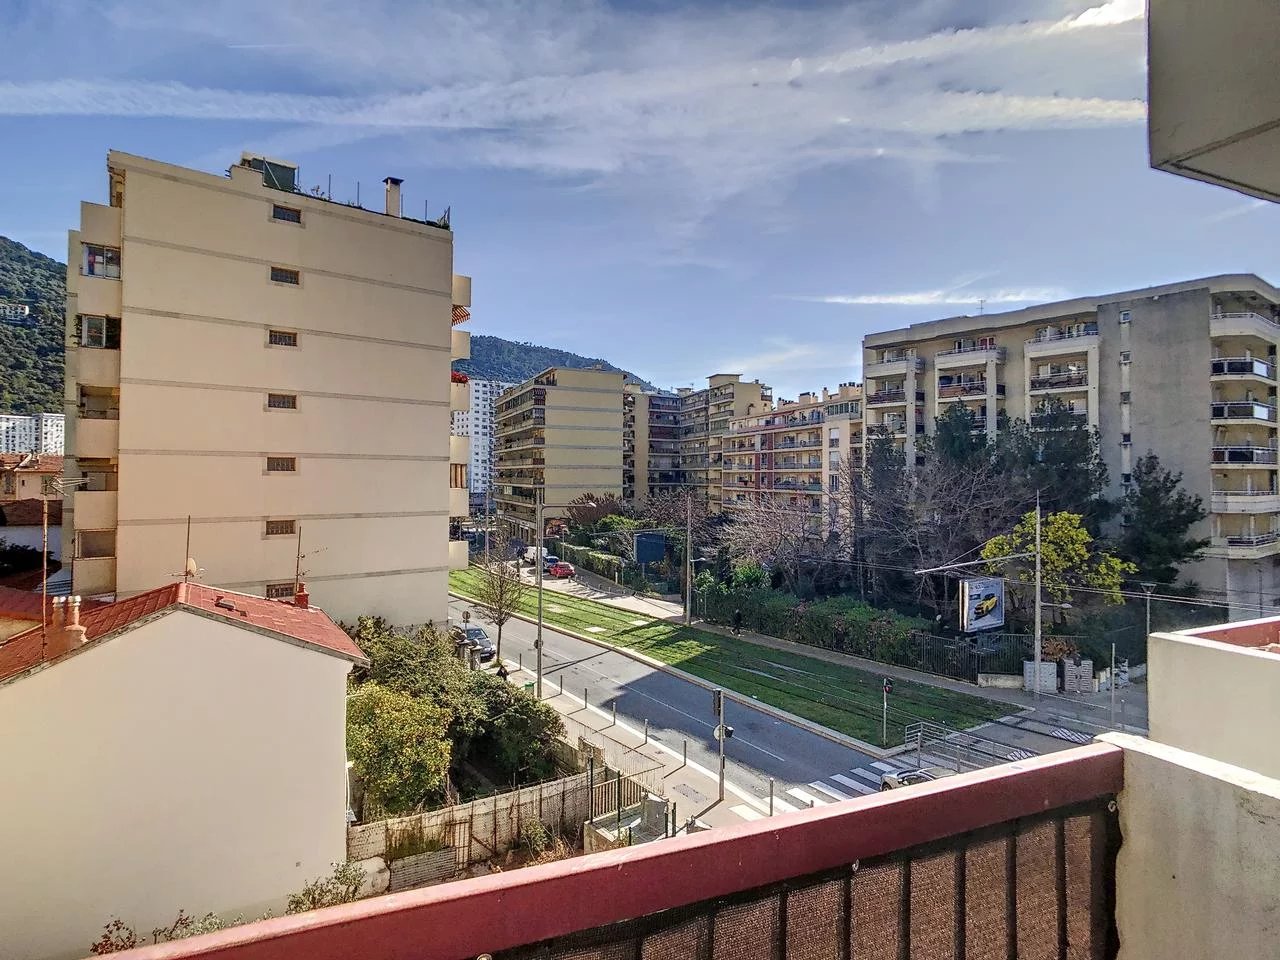 Appartement  1 Locali 28.36m2  In vendita    98 000 €